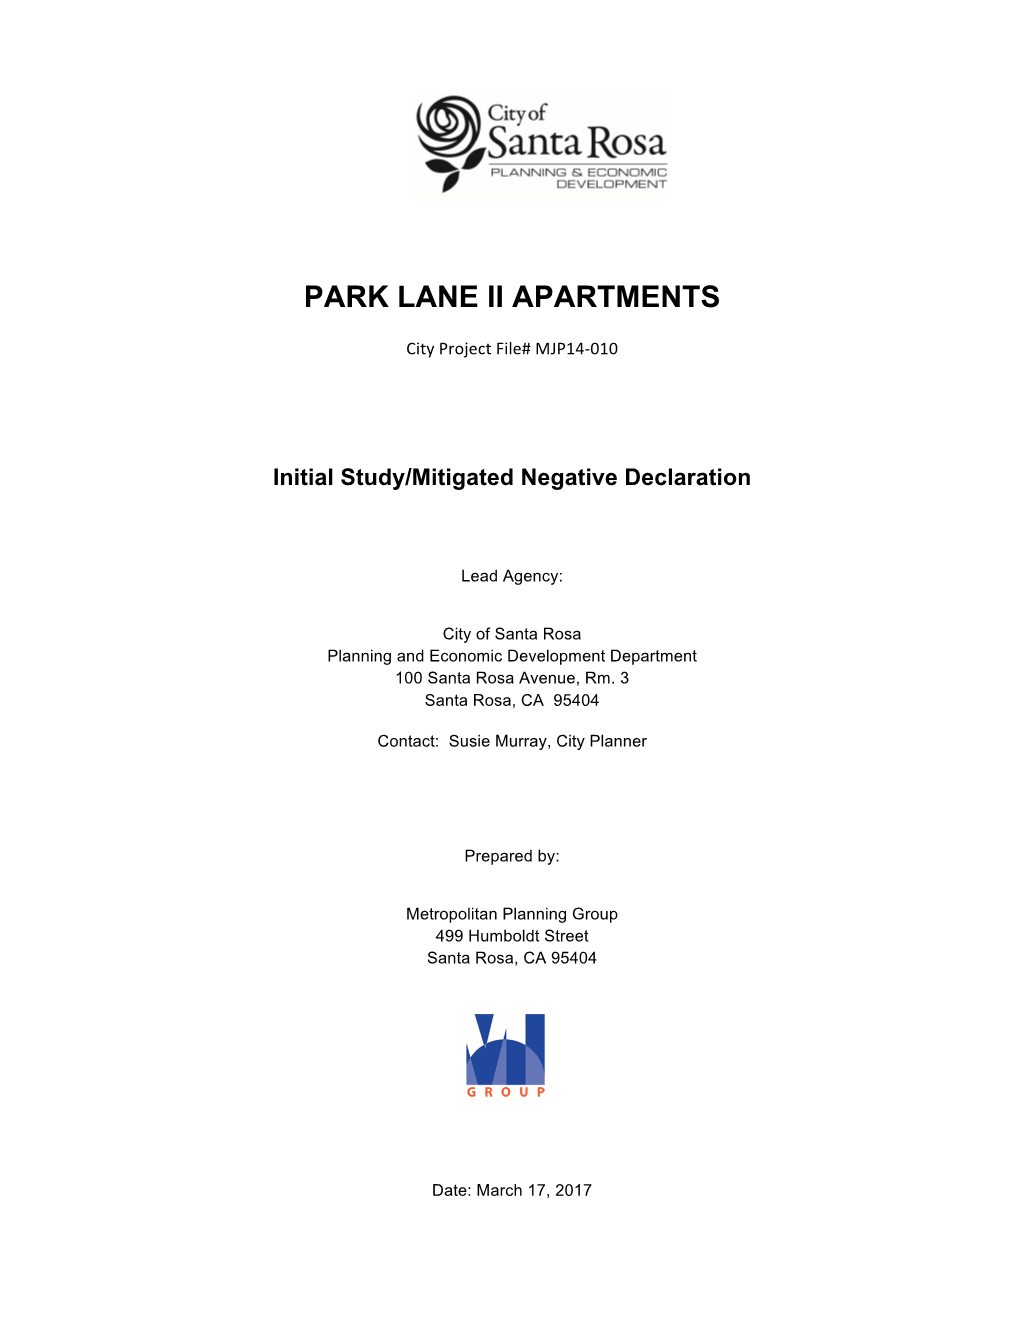 Park Lane II Apartments Initial Study / Mitigated Negative Declaration